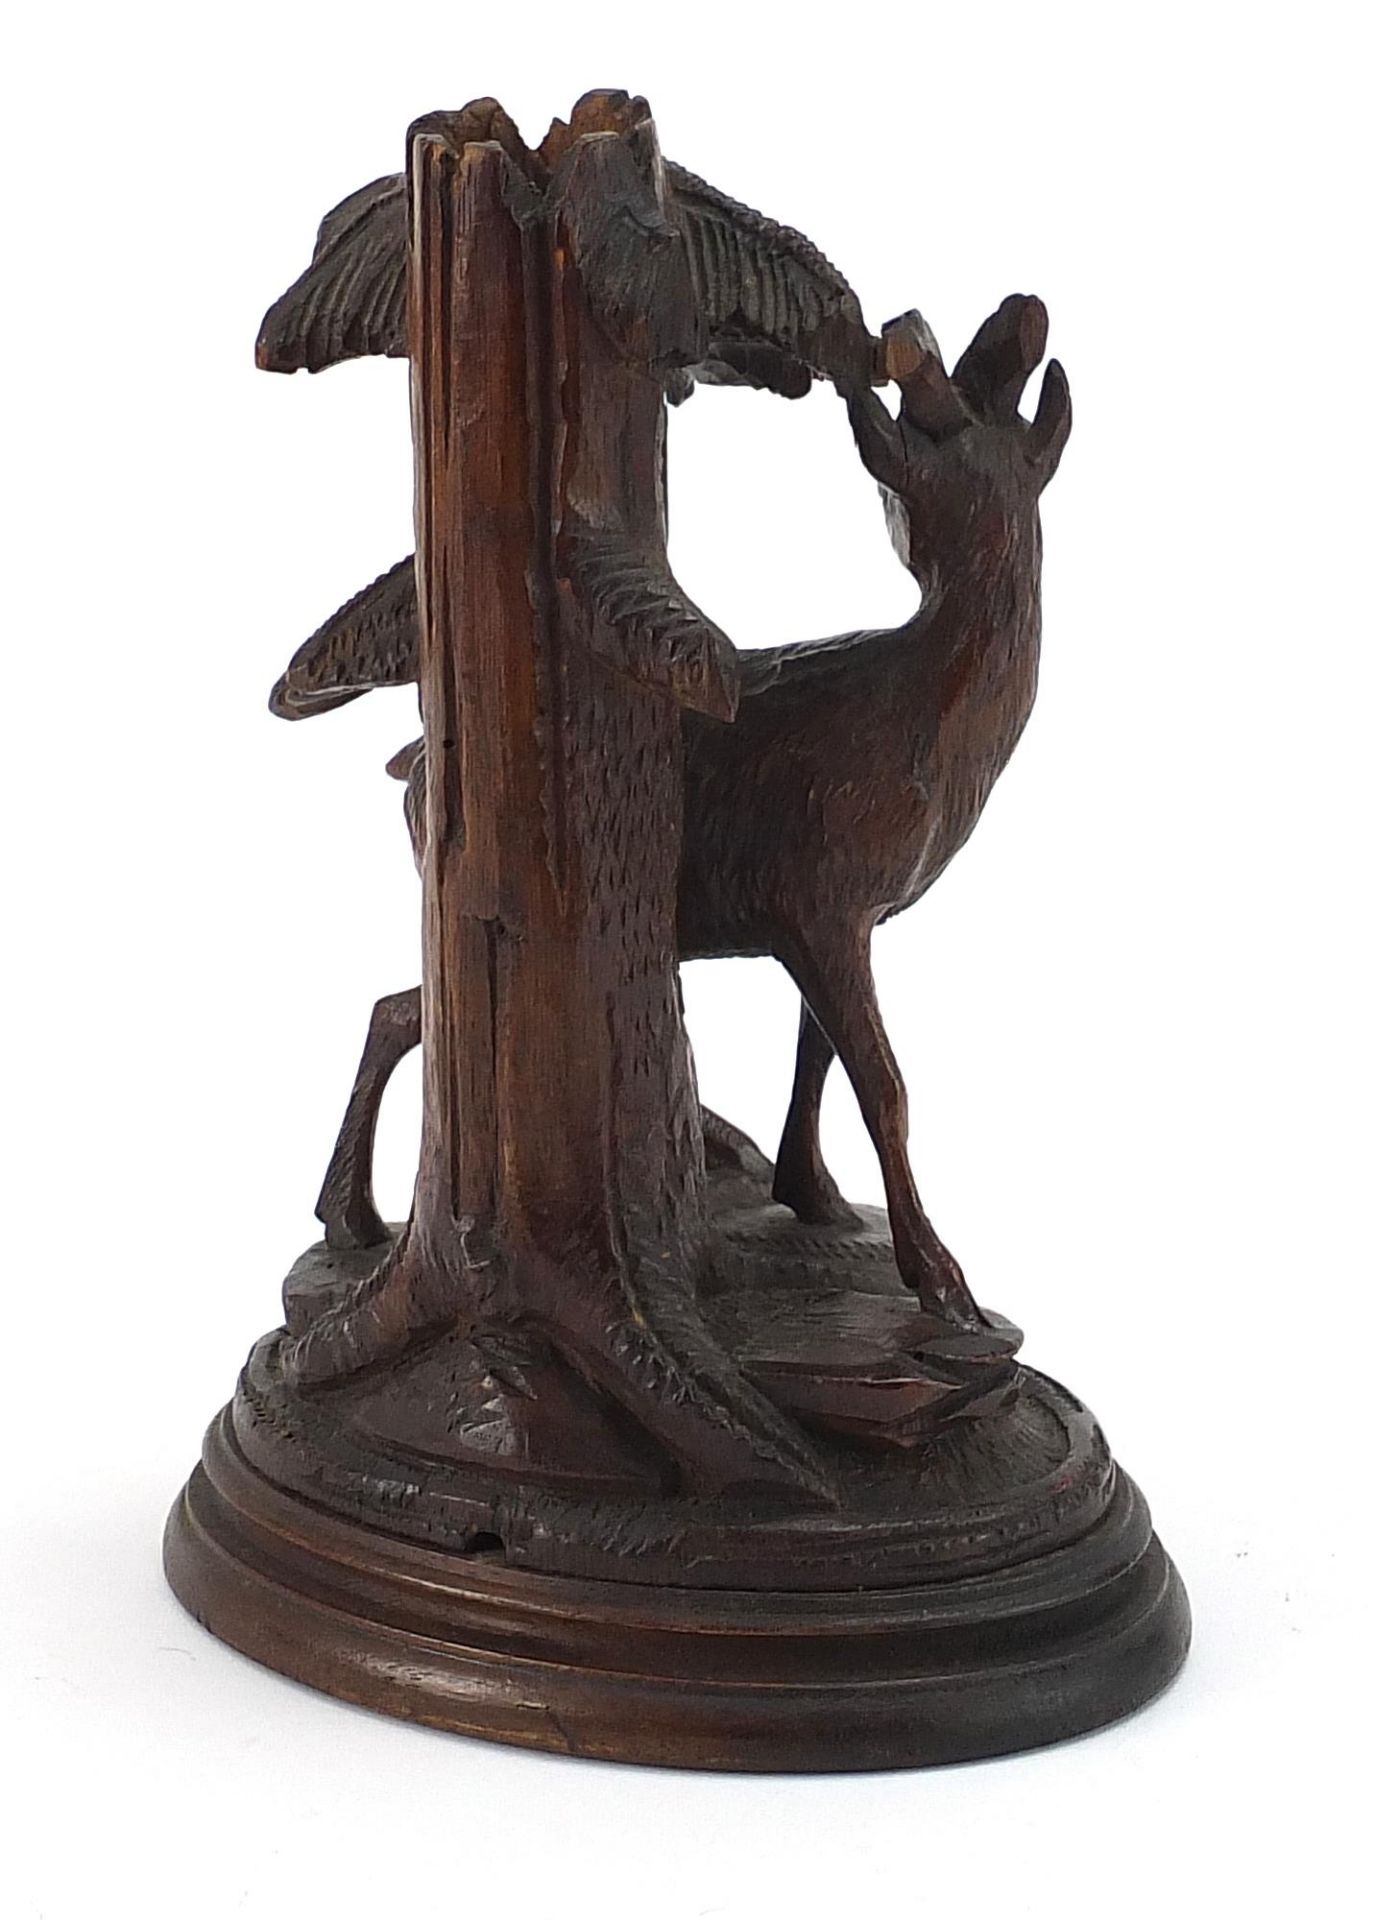 Carved Black Forest spill vase in the form of a deer beside a trunk, 21cm high - Image 2 of 3